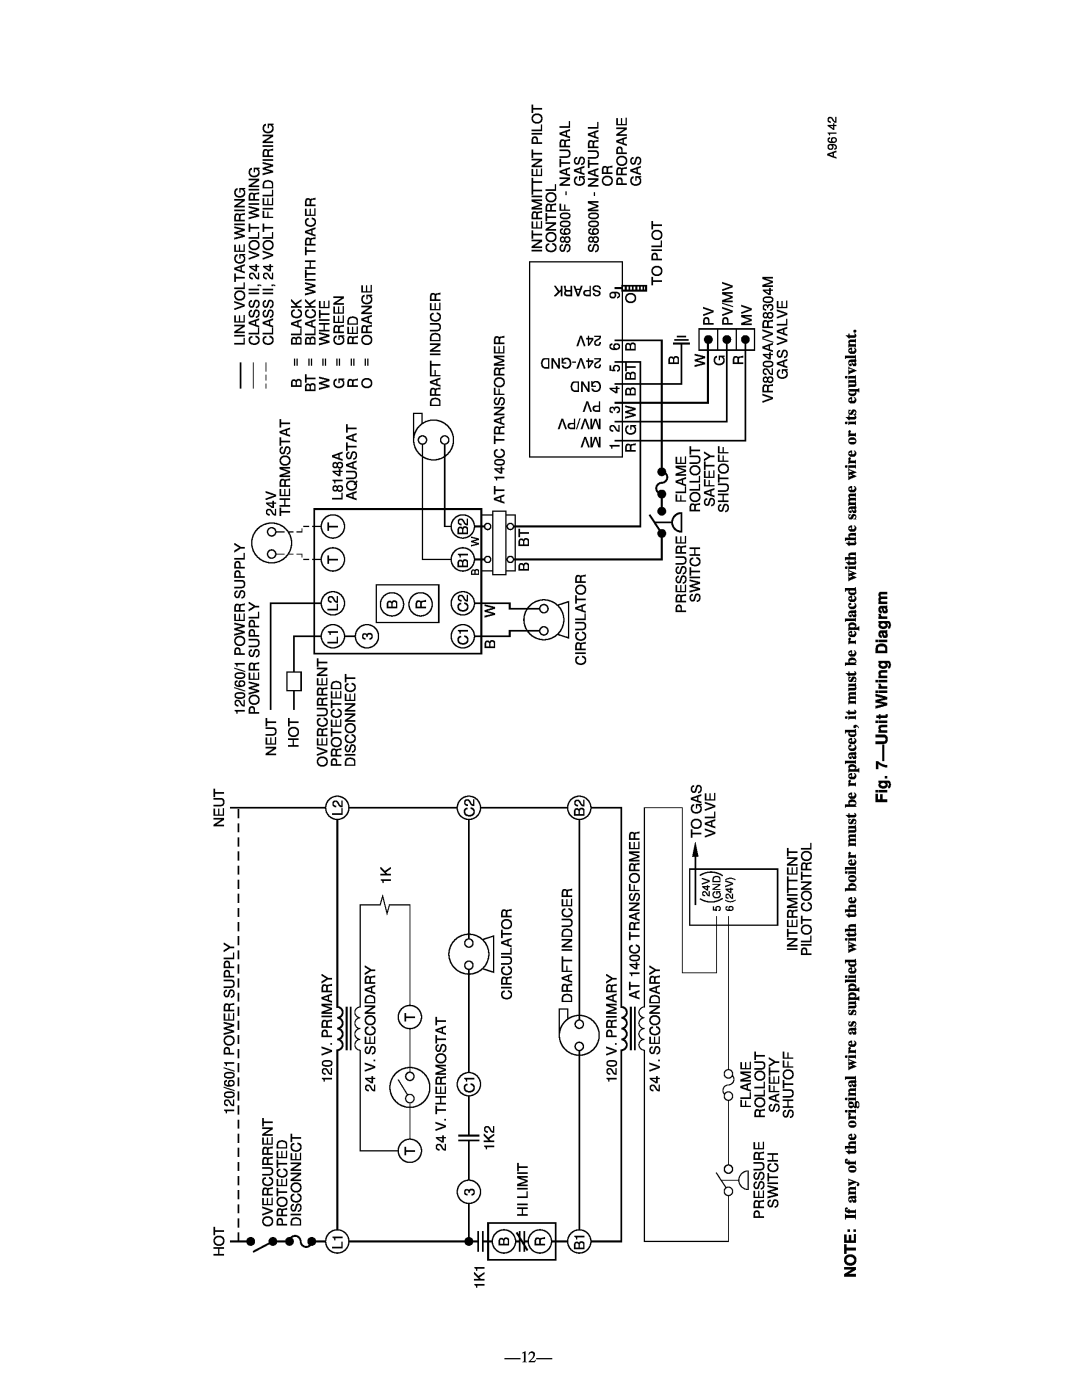 National Products Series B, BW3 instruction manual Ð12Ð, ÐUnit Wiring Diagram 